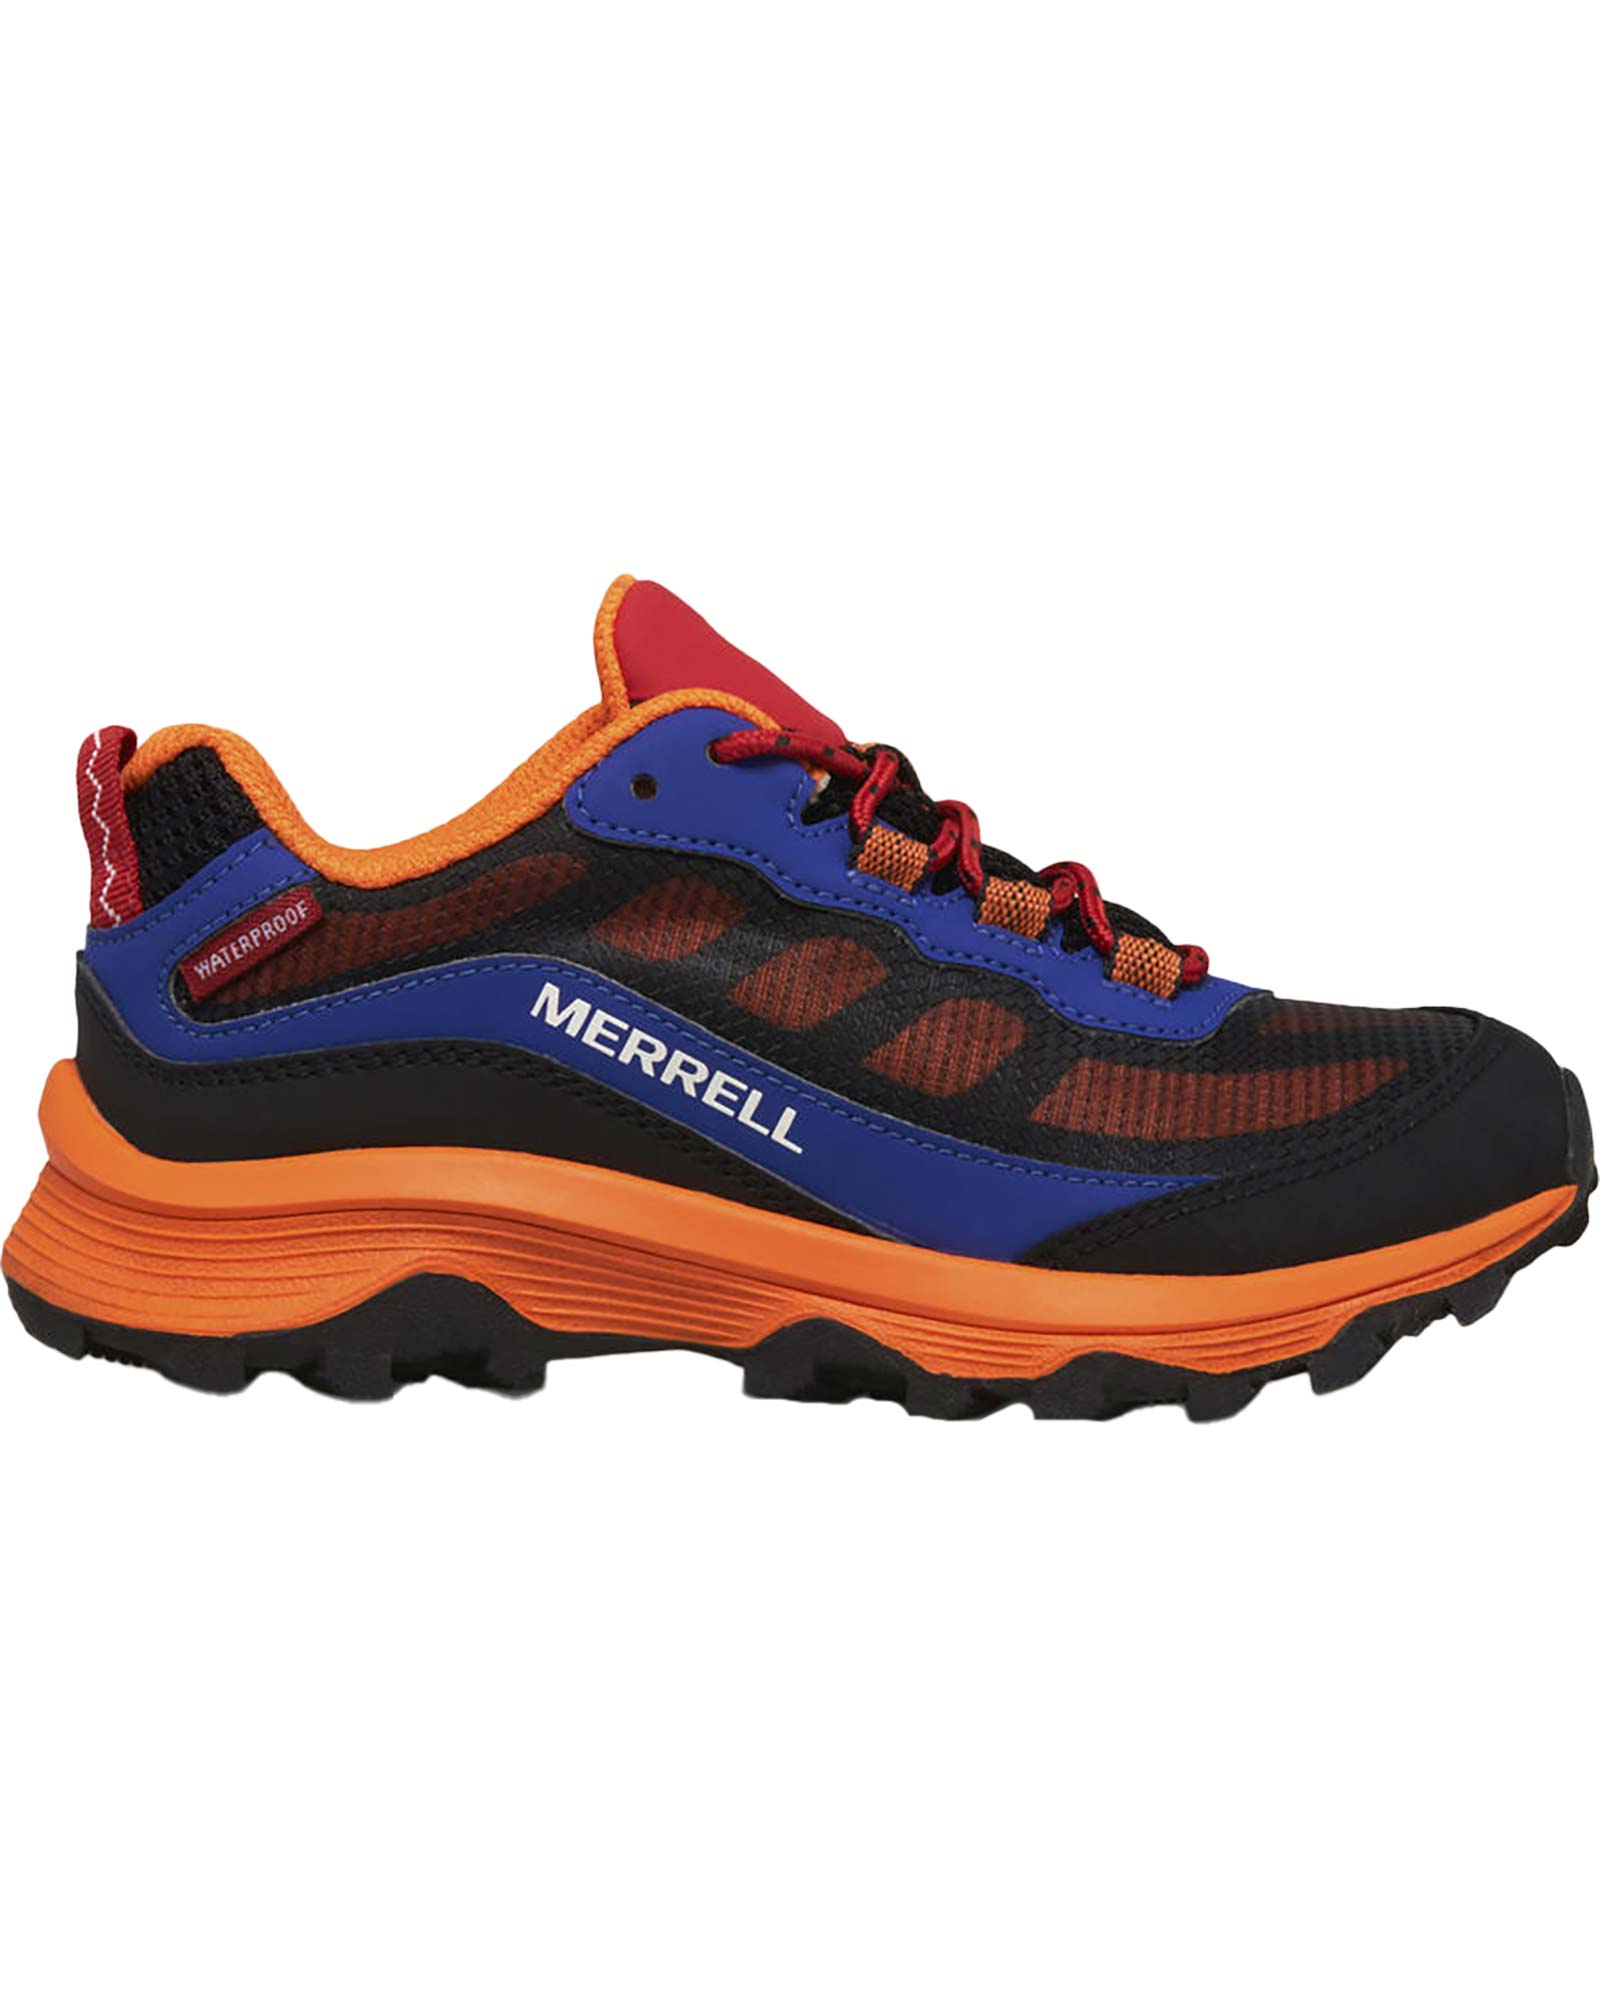 Merrell Moab Speed Laces Kids’ Waterproof Shoes - Blue/Black/Orange UK 1